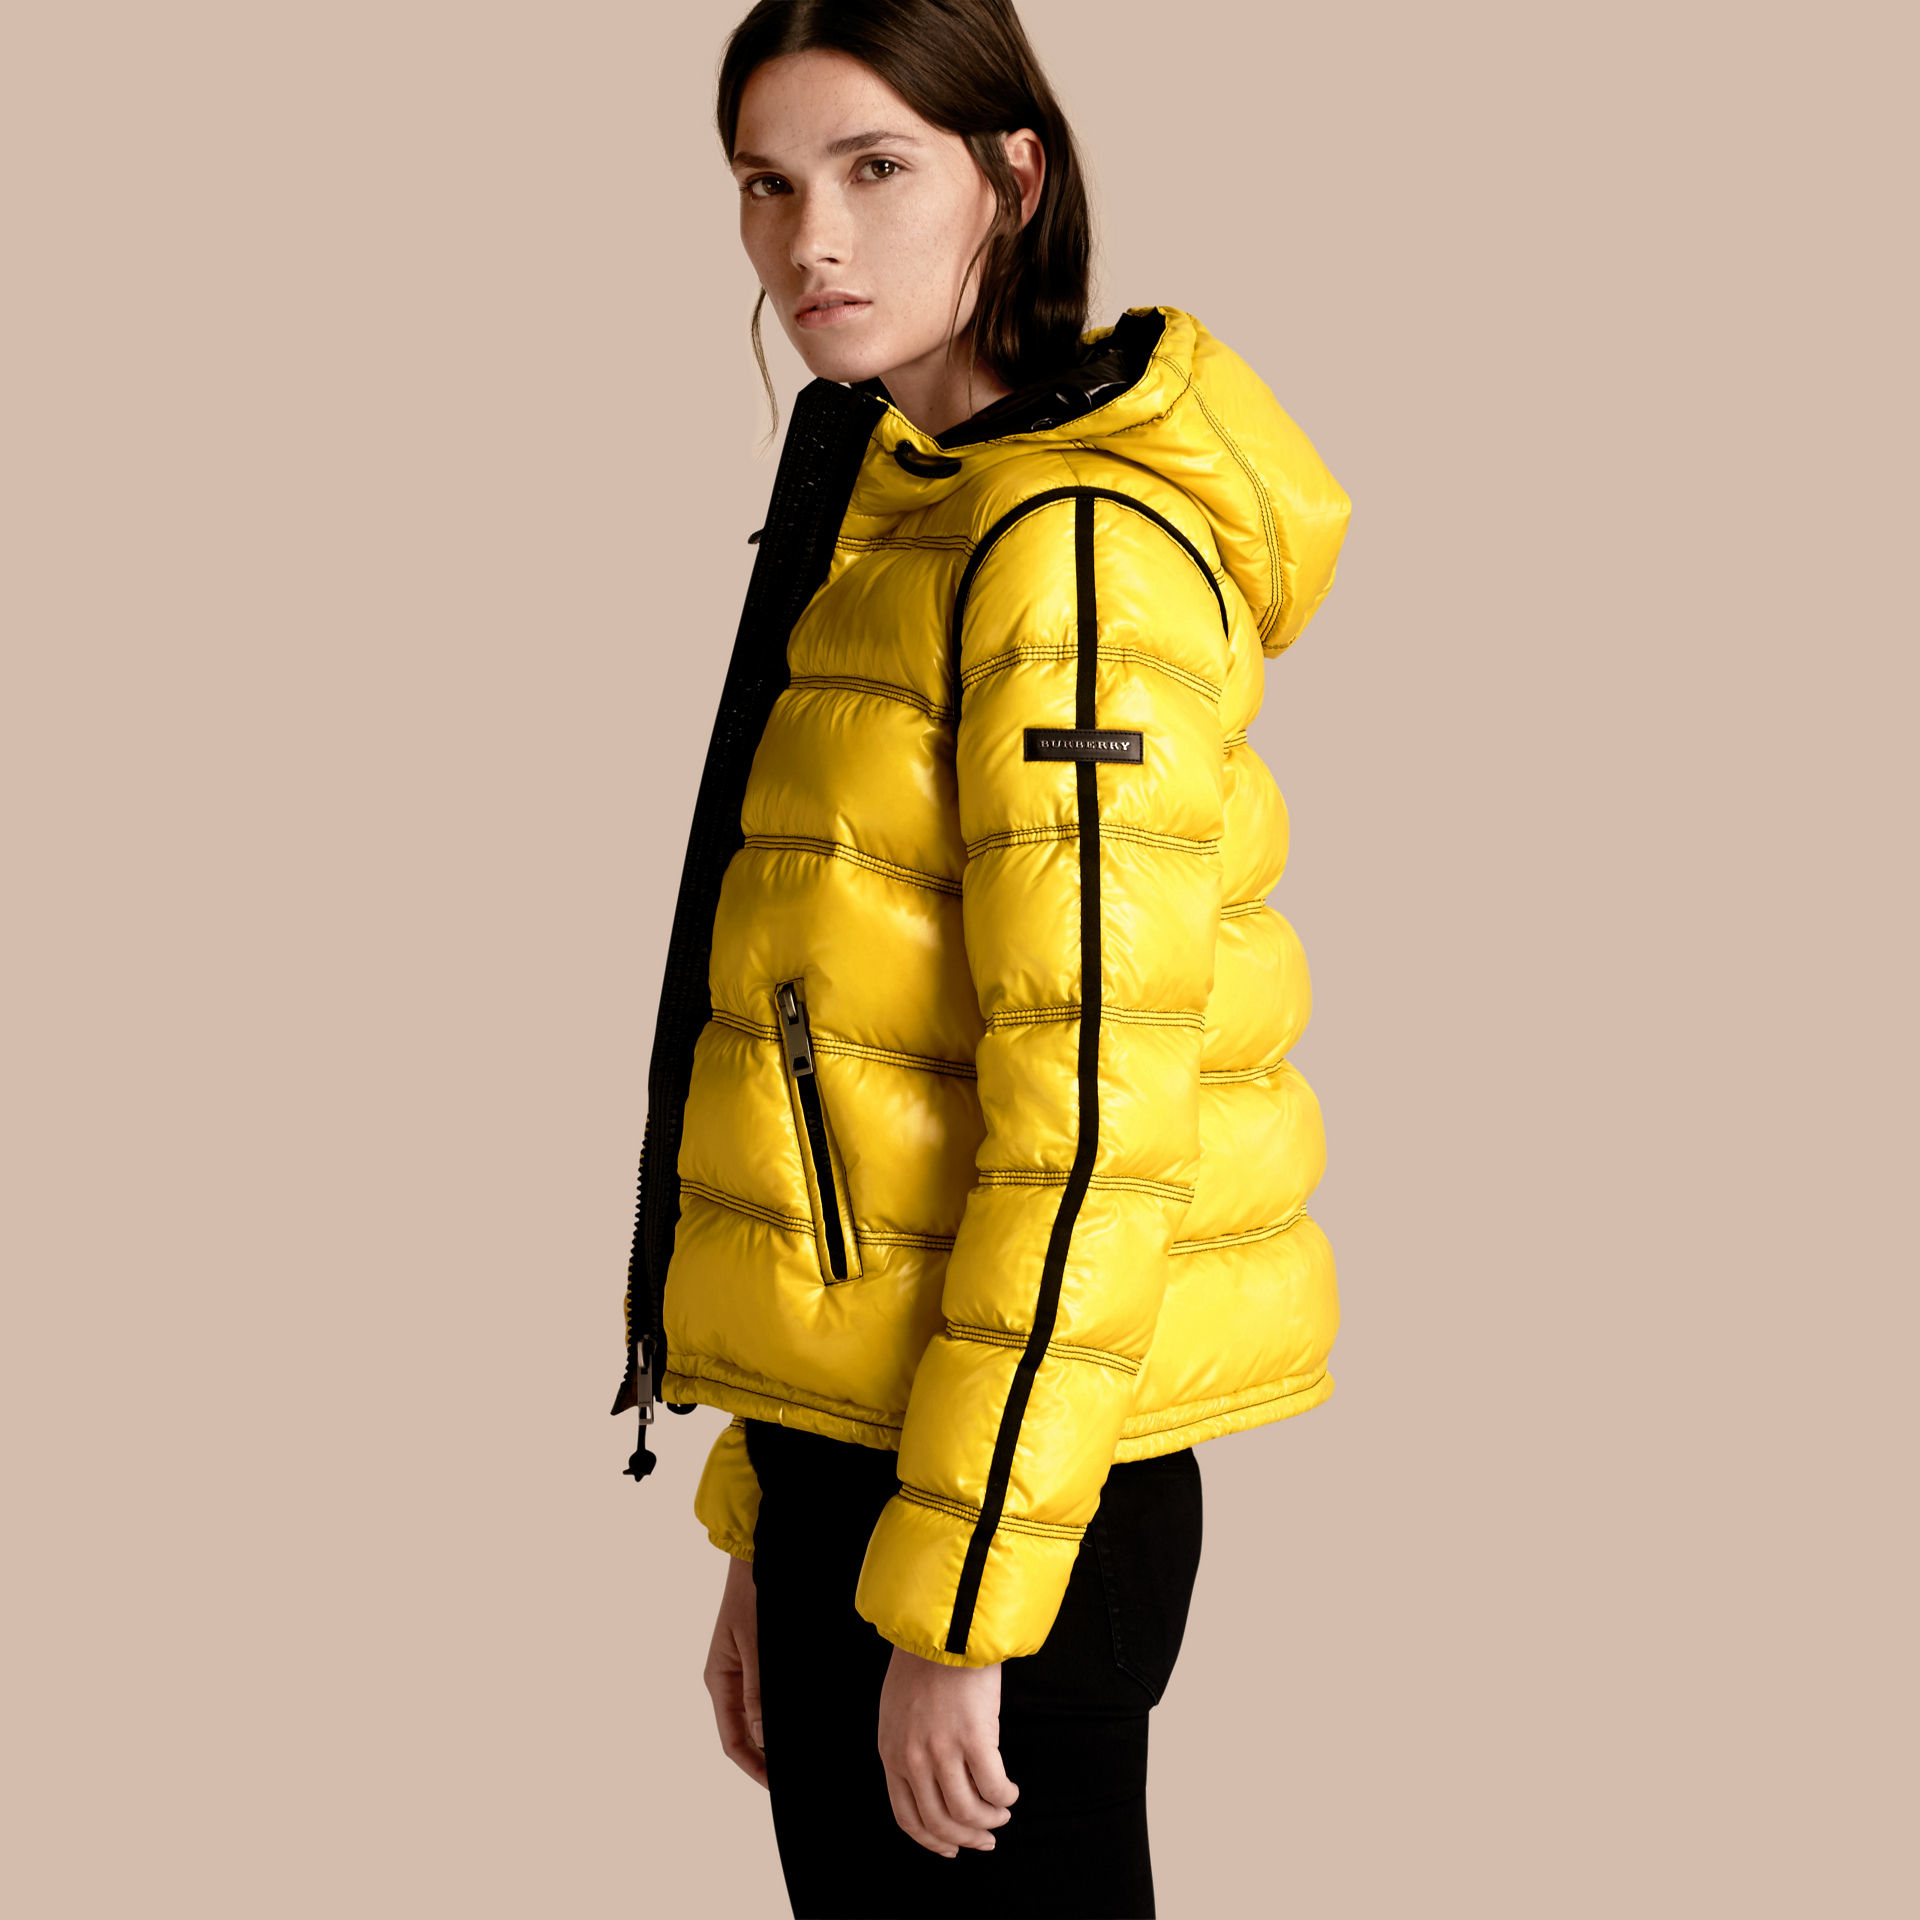 burberry jacket womens yellow